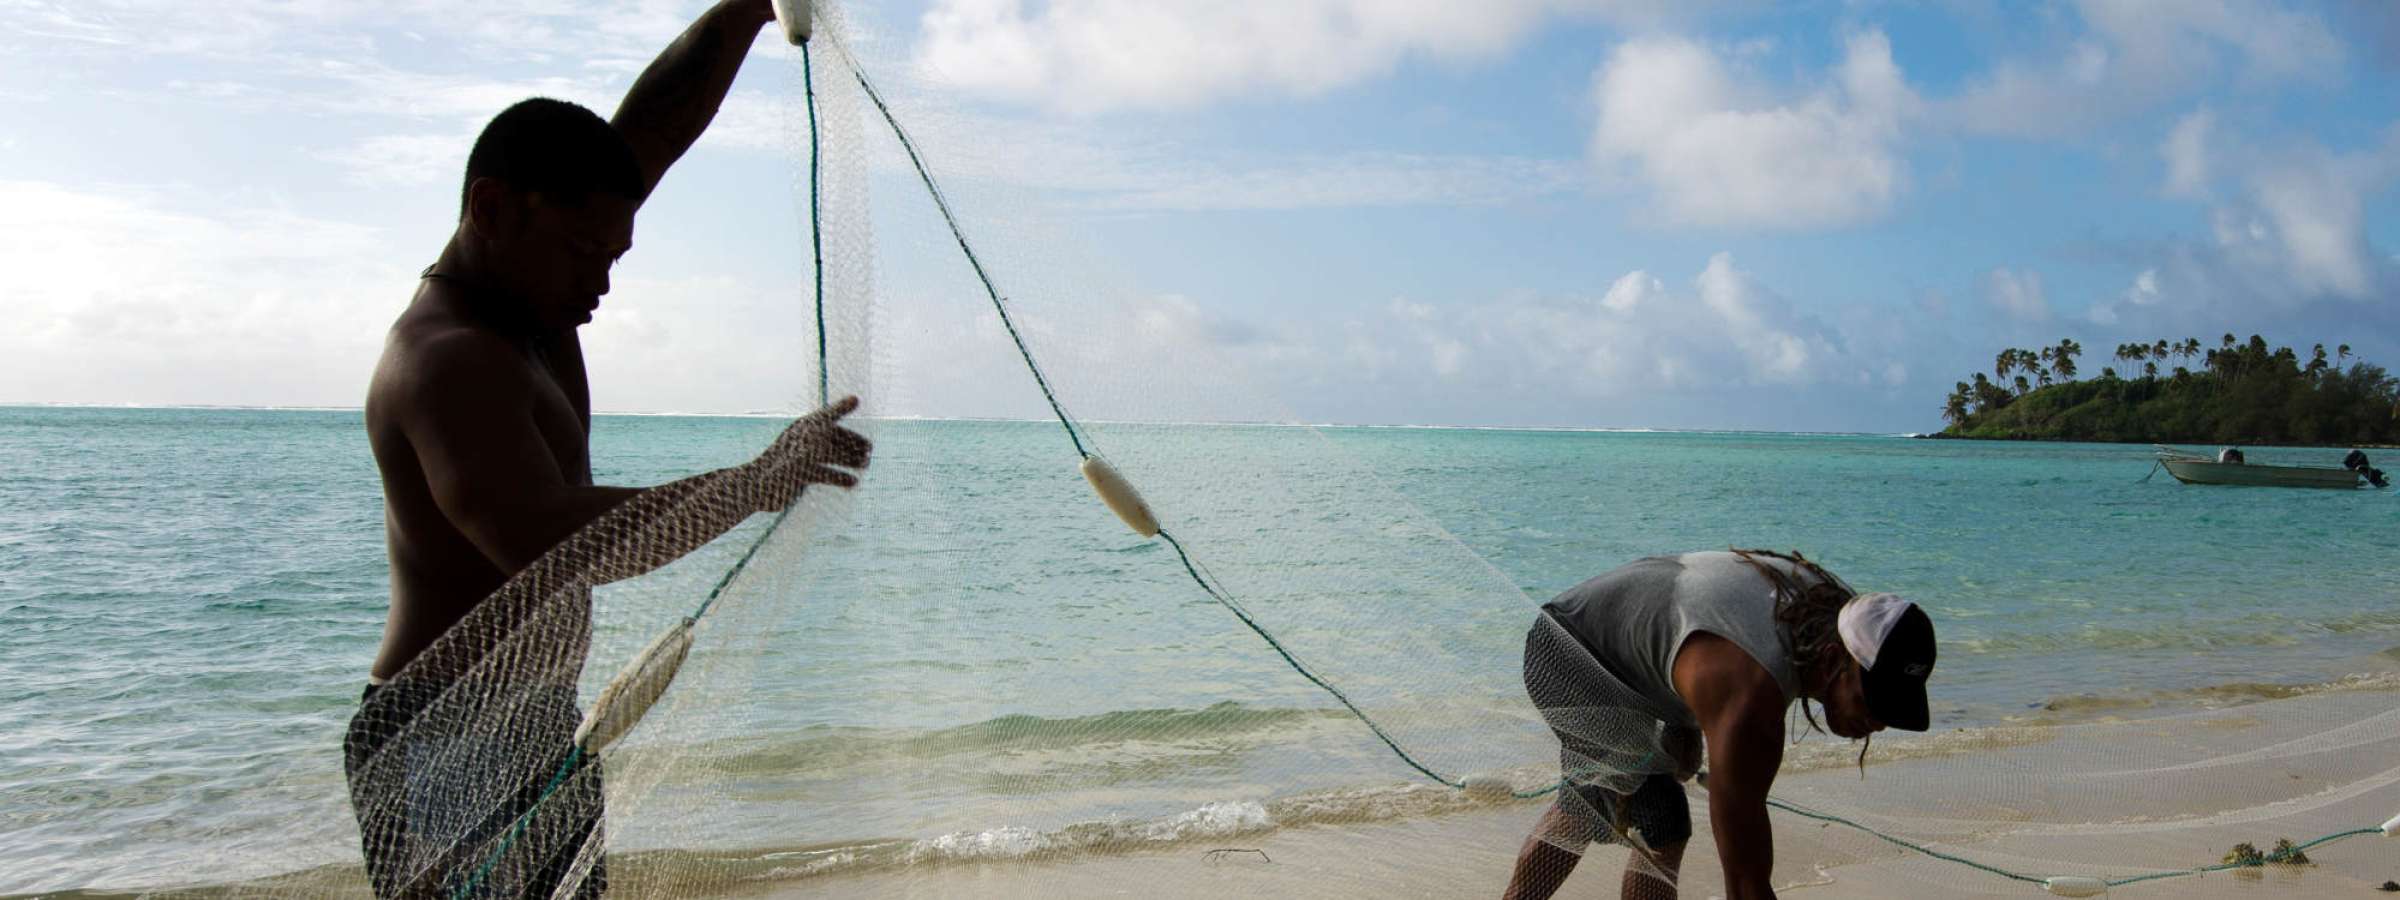 Men fishing on a beach